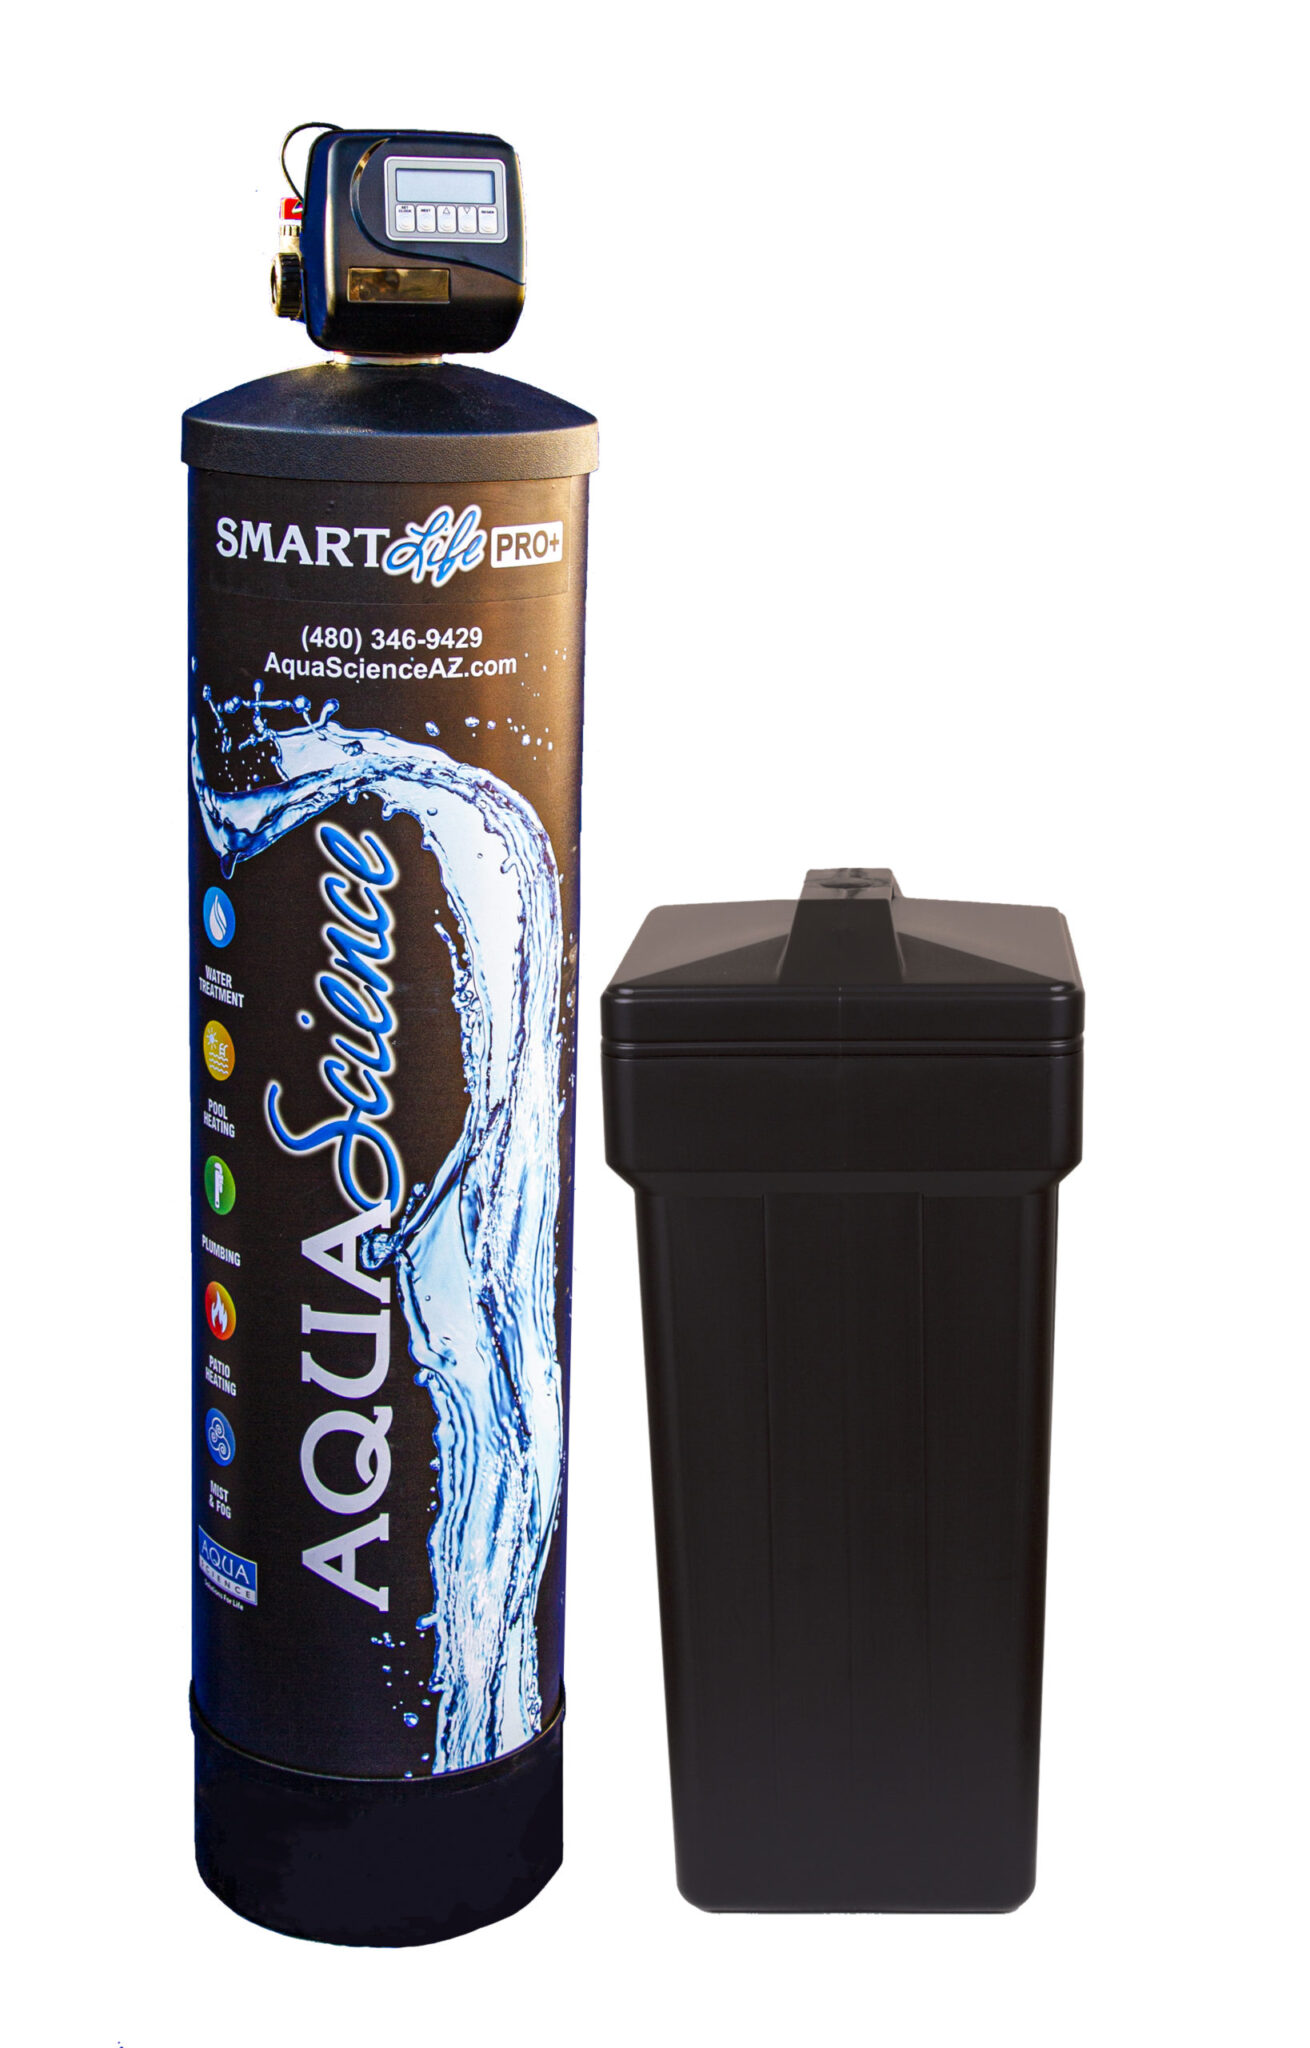 SmartLife Pro Plus Water Softener